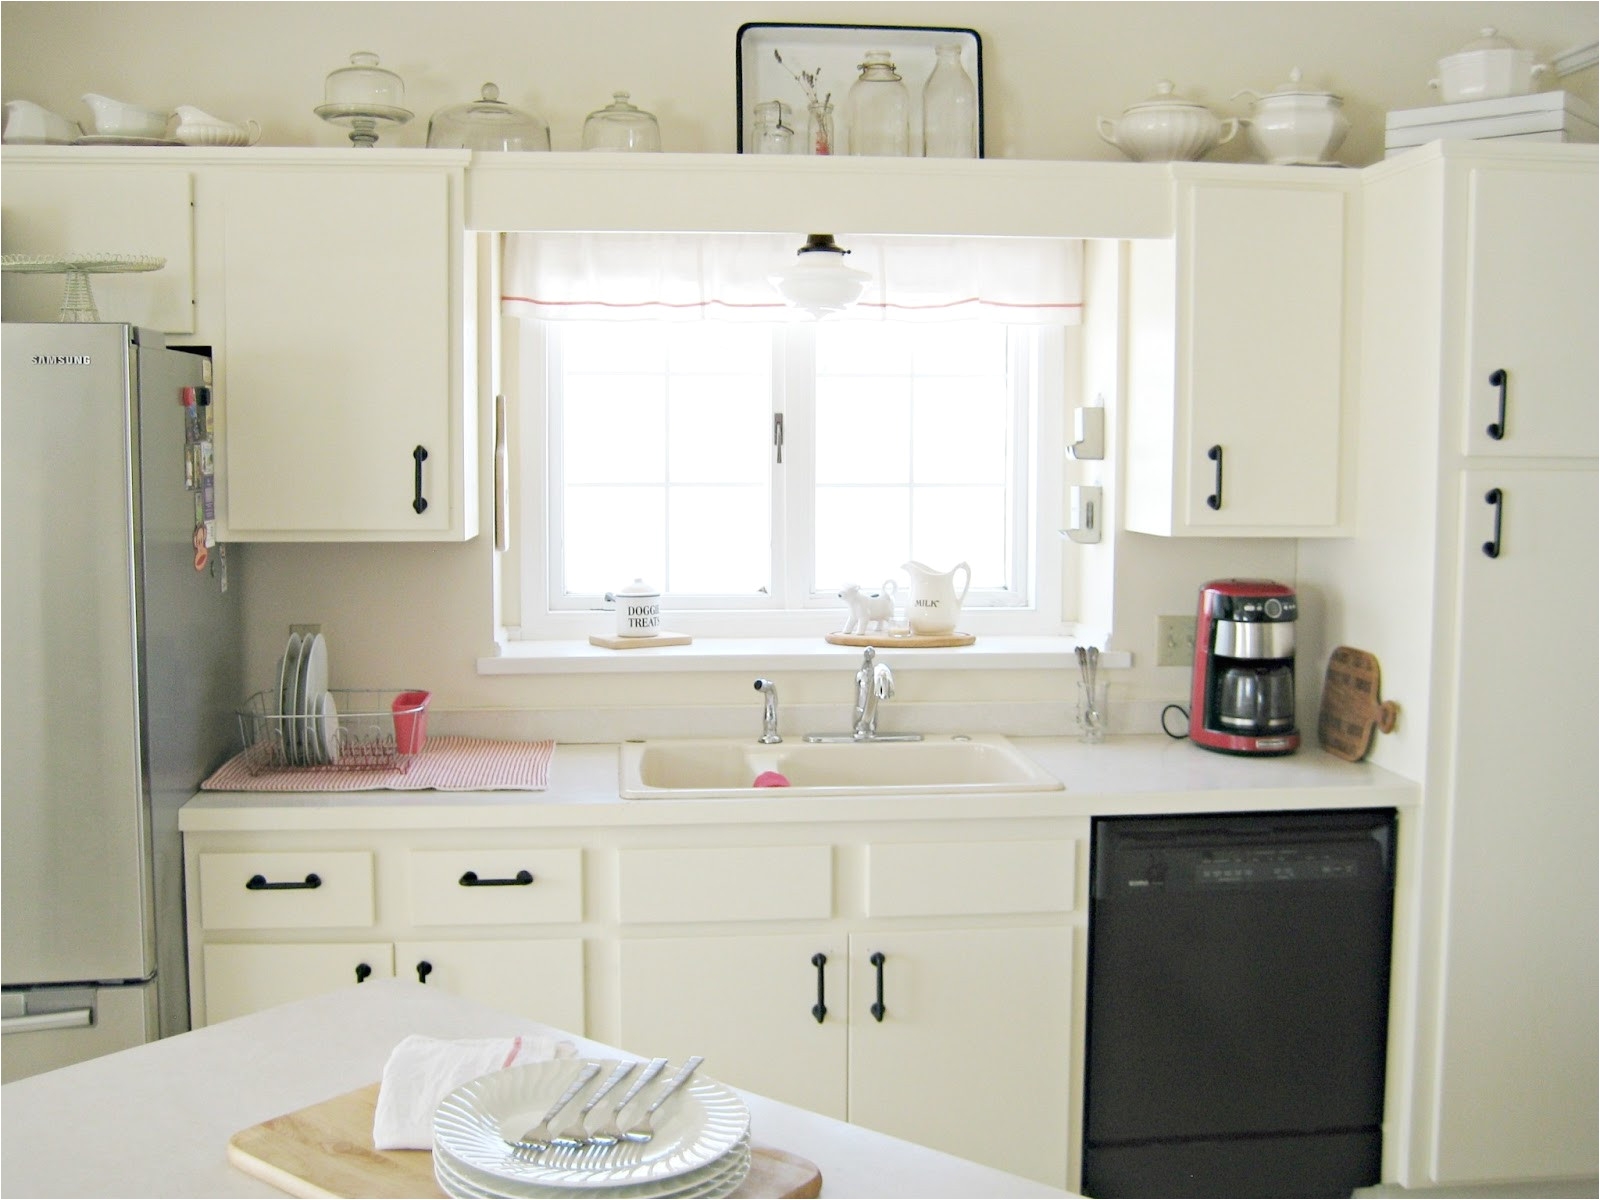 hanging cabinet design for kitchen inspirational over sink lighting over the sink kitchen light od lighting layout